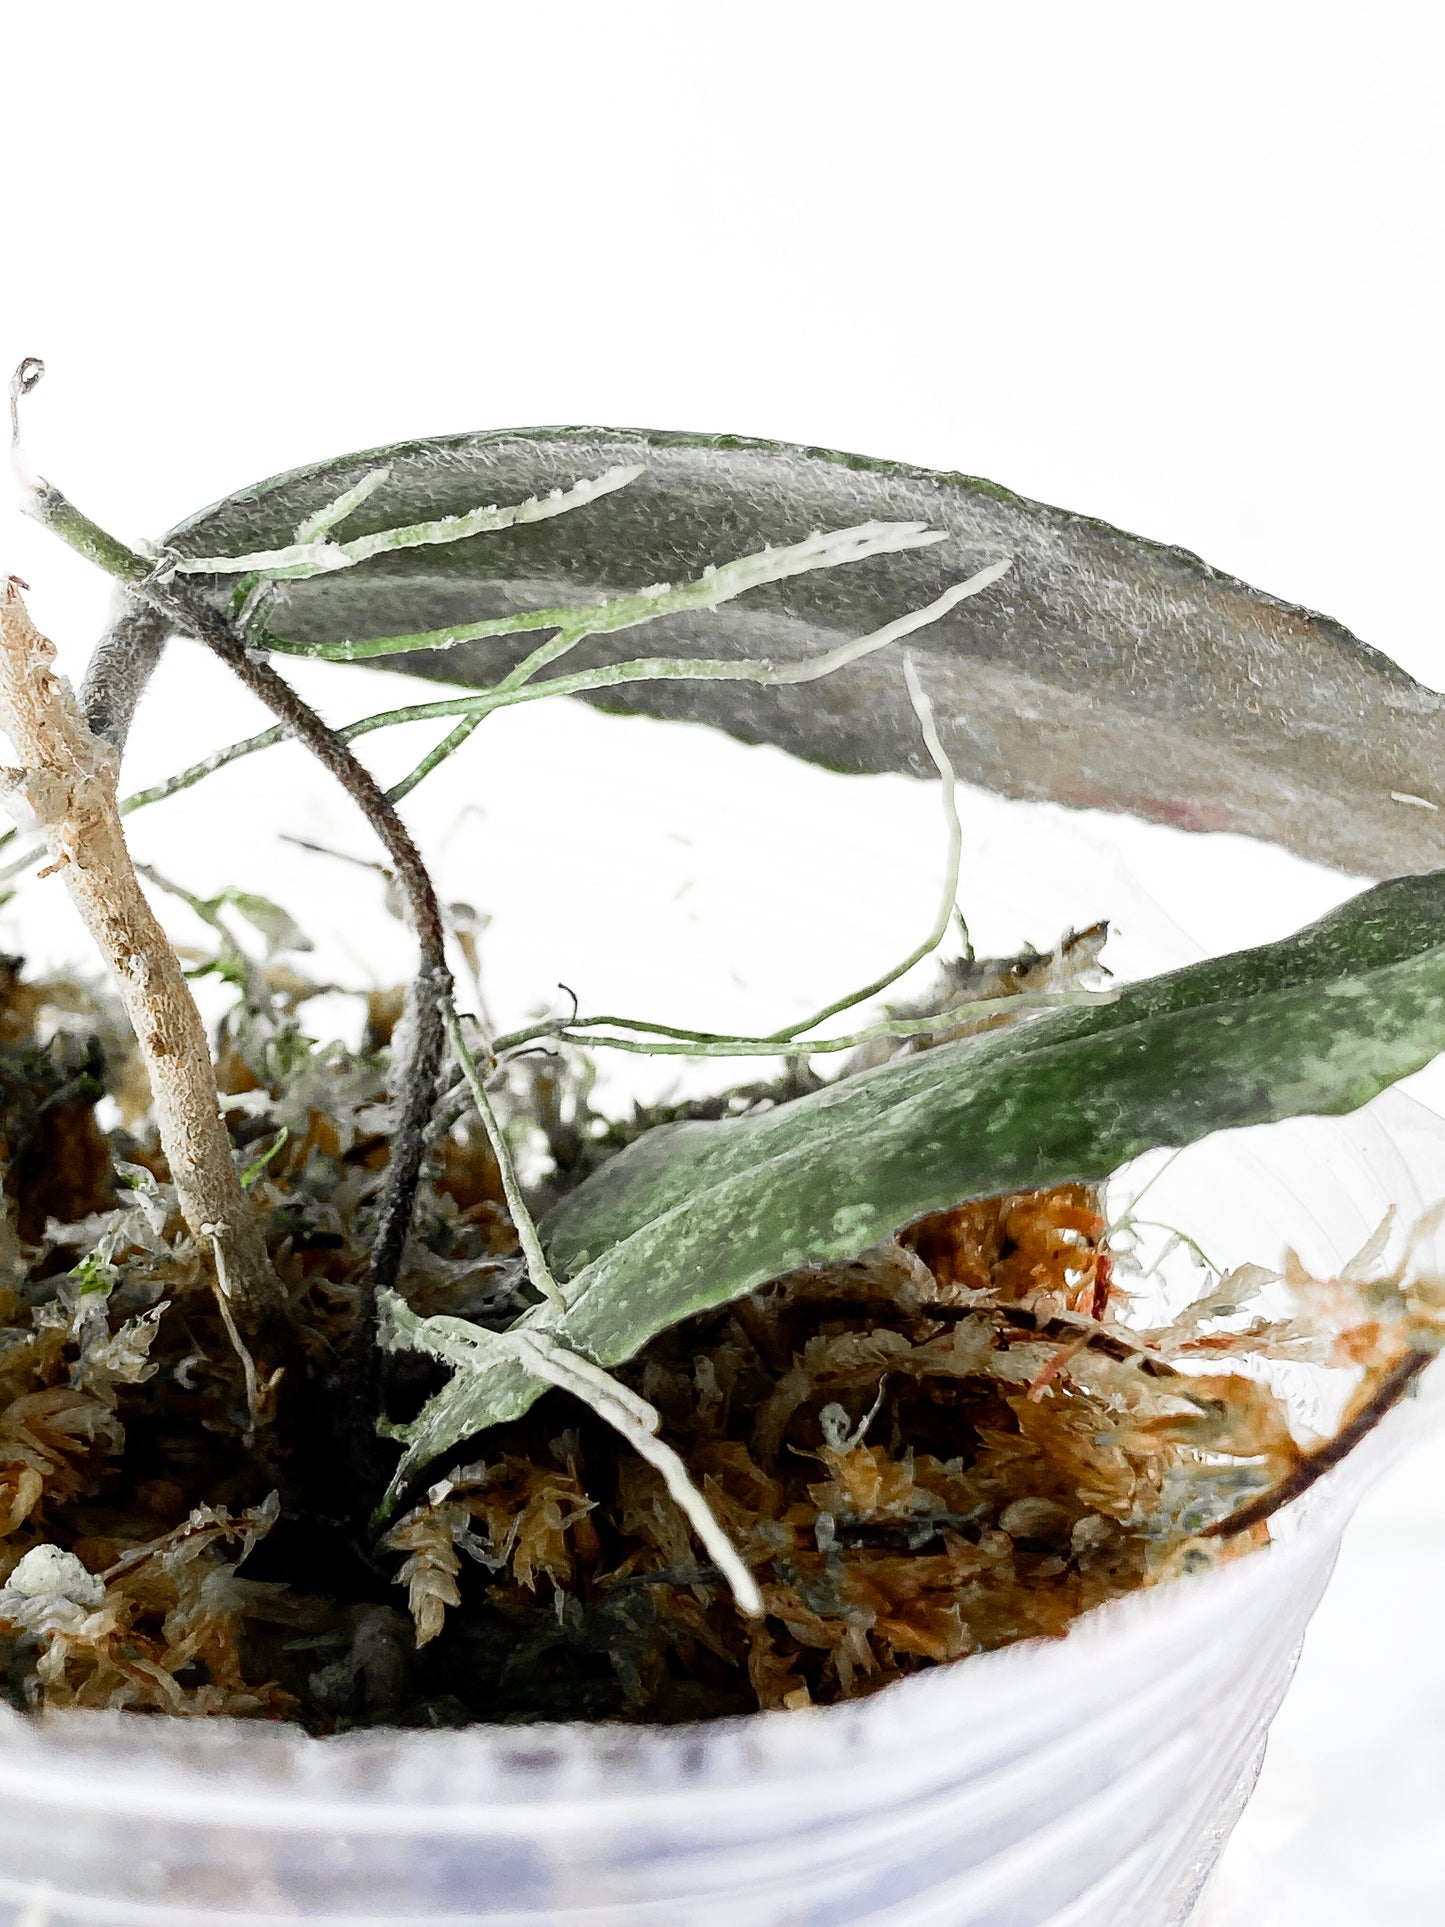 Hoya caudata sumatra